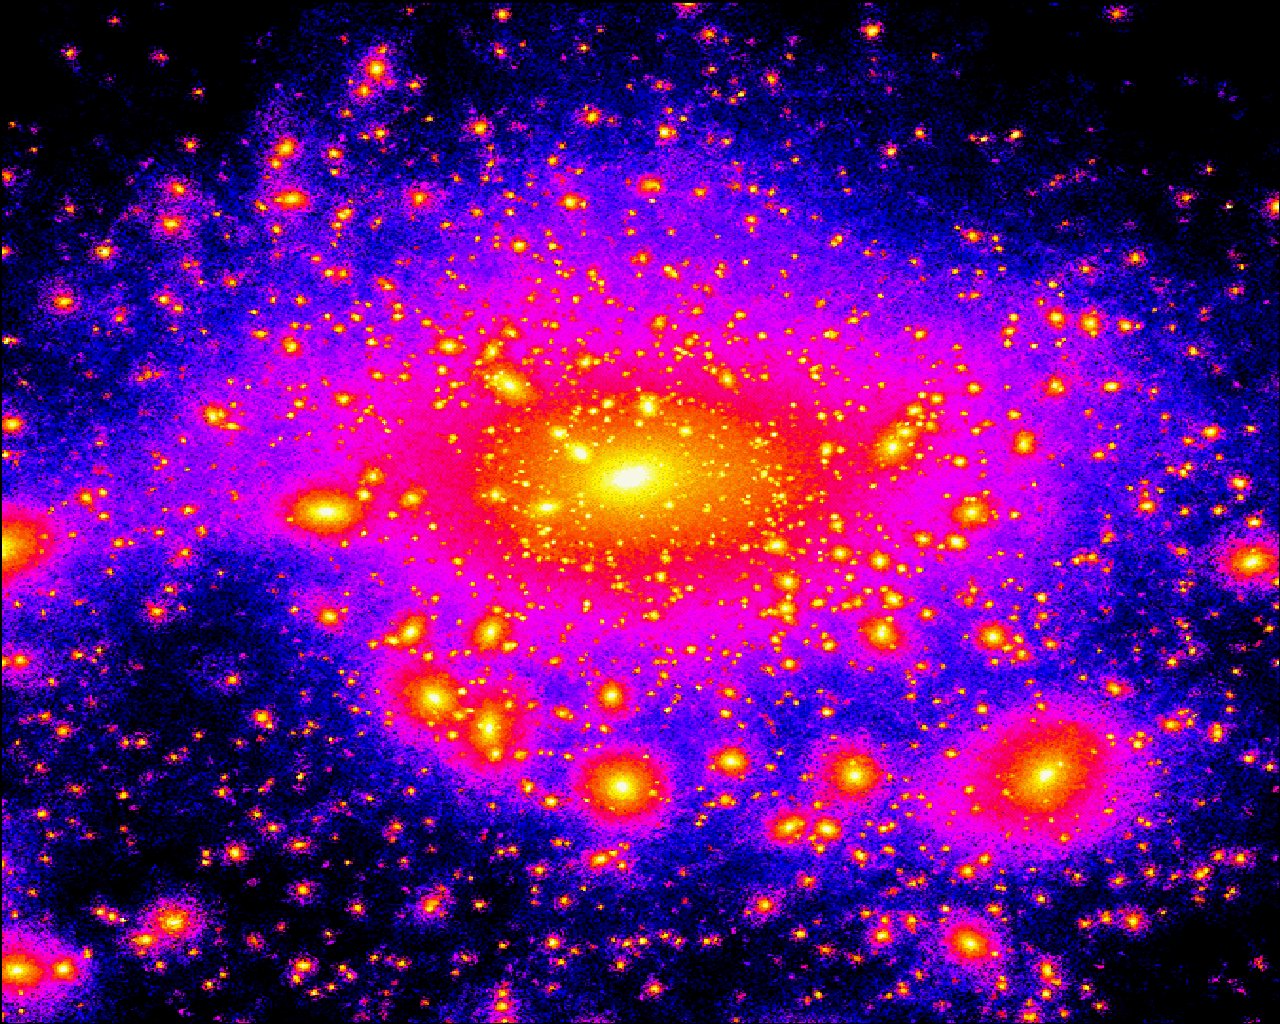 Stars and Galaxies Google image from http://old.wallcoo.net/nature/NASA_JPL_Stars_and_Galaxies/images/Stars_Galaxies_ssc2005-14c.jpg